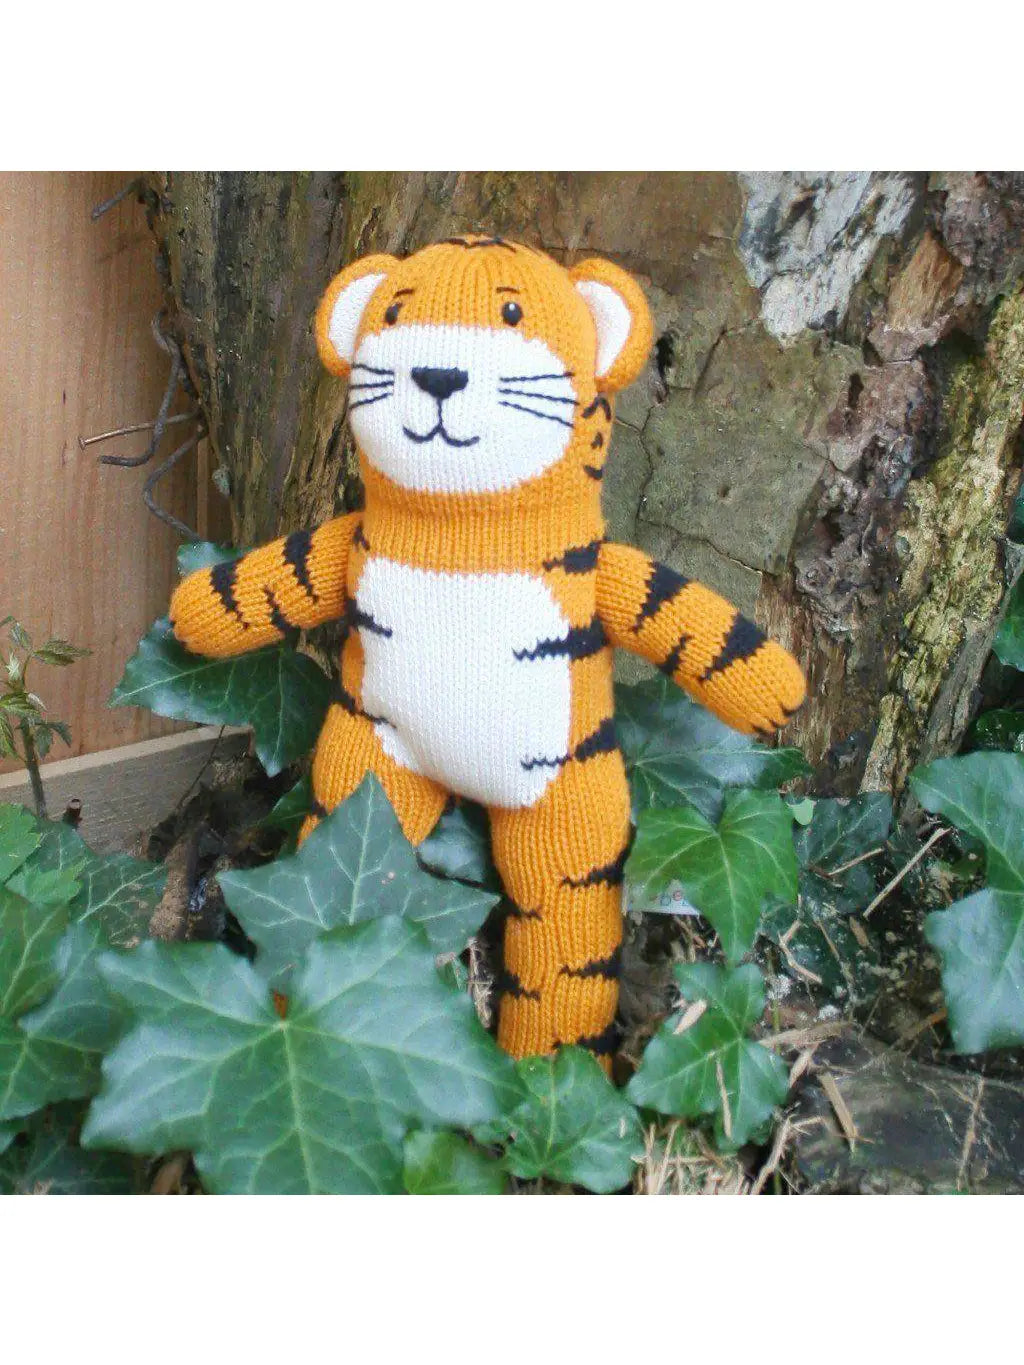 Tiger Kai the Knit Plush Zubel's